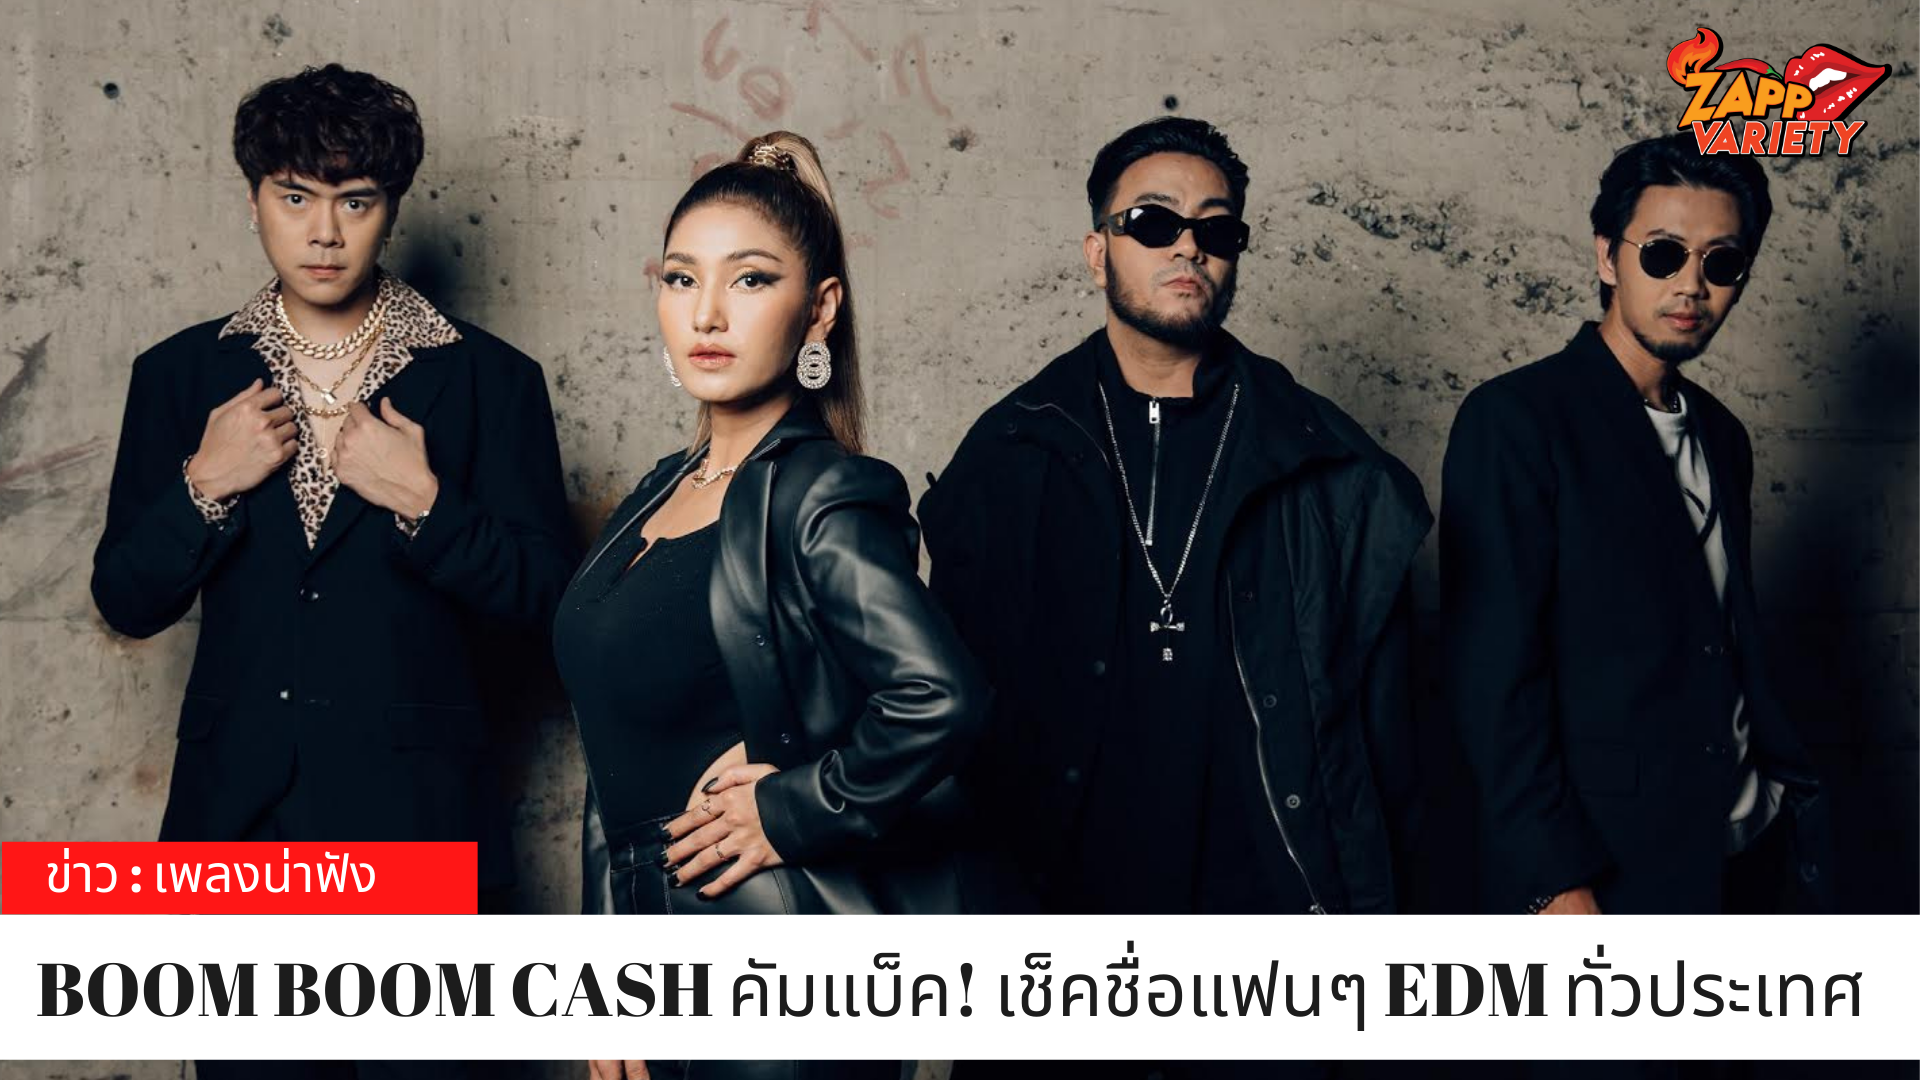 BOOM BOOM CASH เตรียมคัมแบ็ค!  ปล่อยเพลง “สาธุ 2021” เช็คชื่อแฟนๆ EDM ทั่วประเทศ